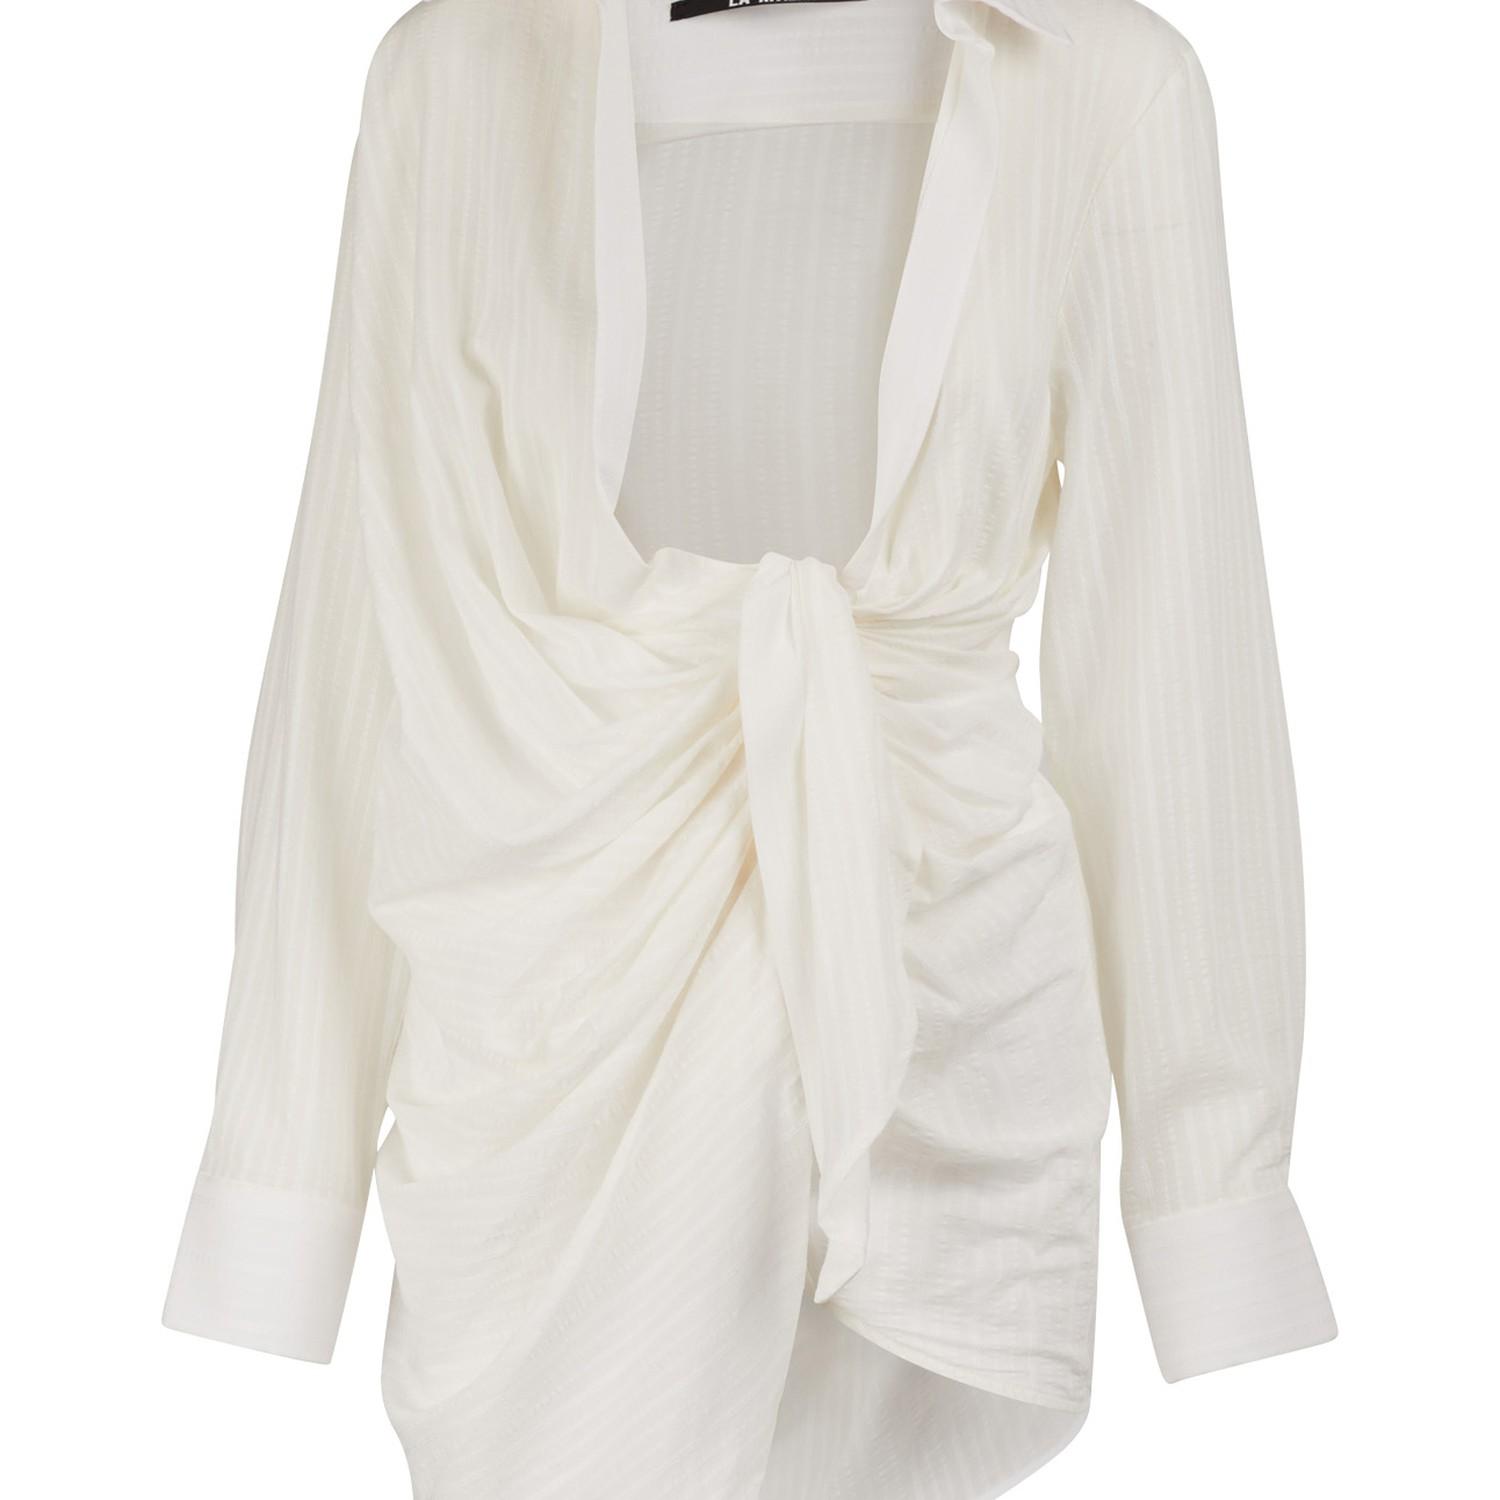 Jacquemus Bahia Dress in White - Lyst